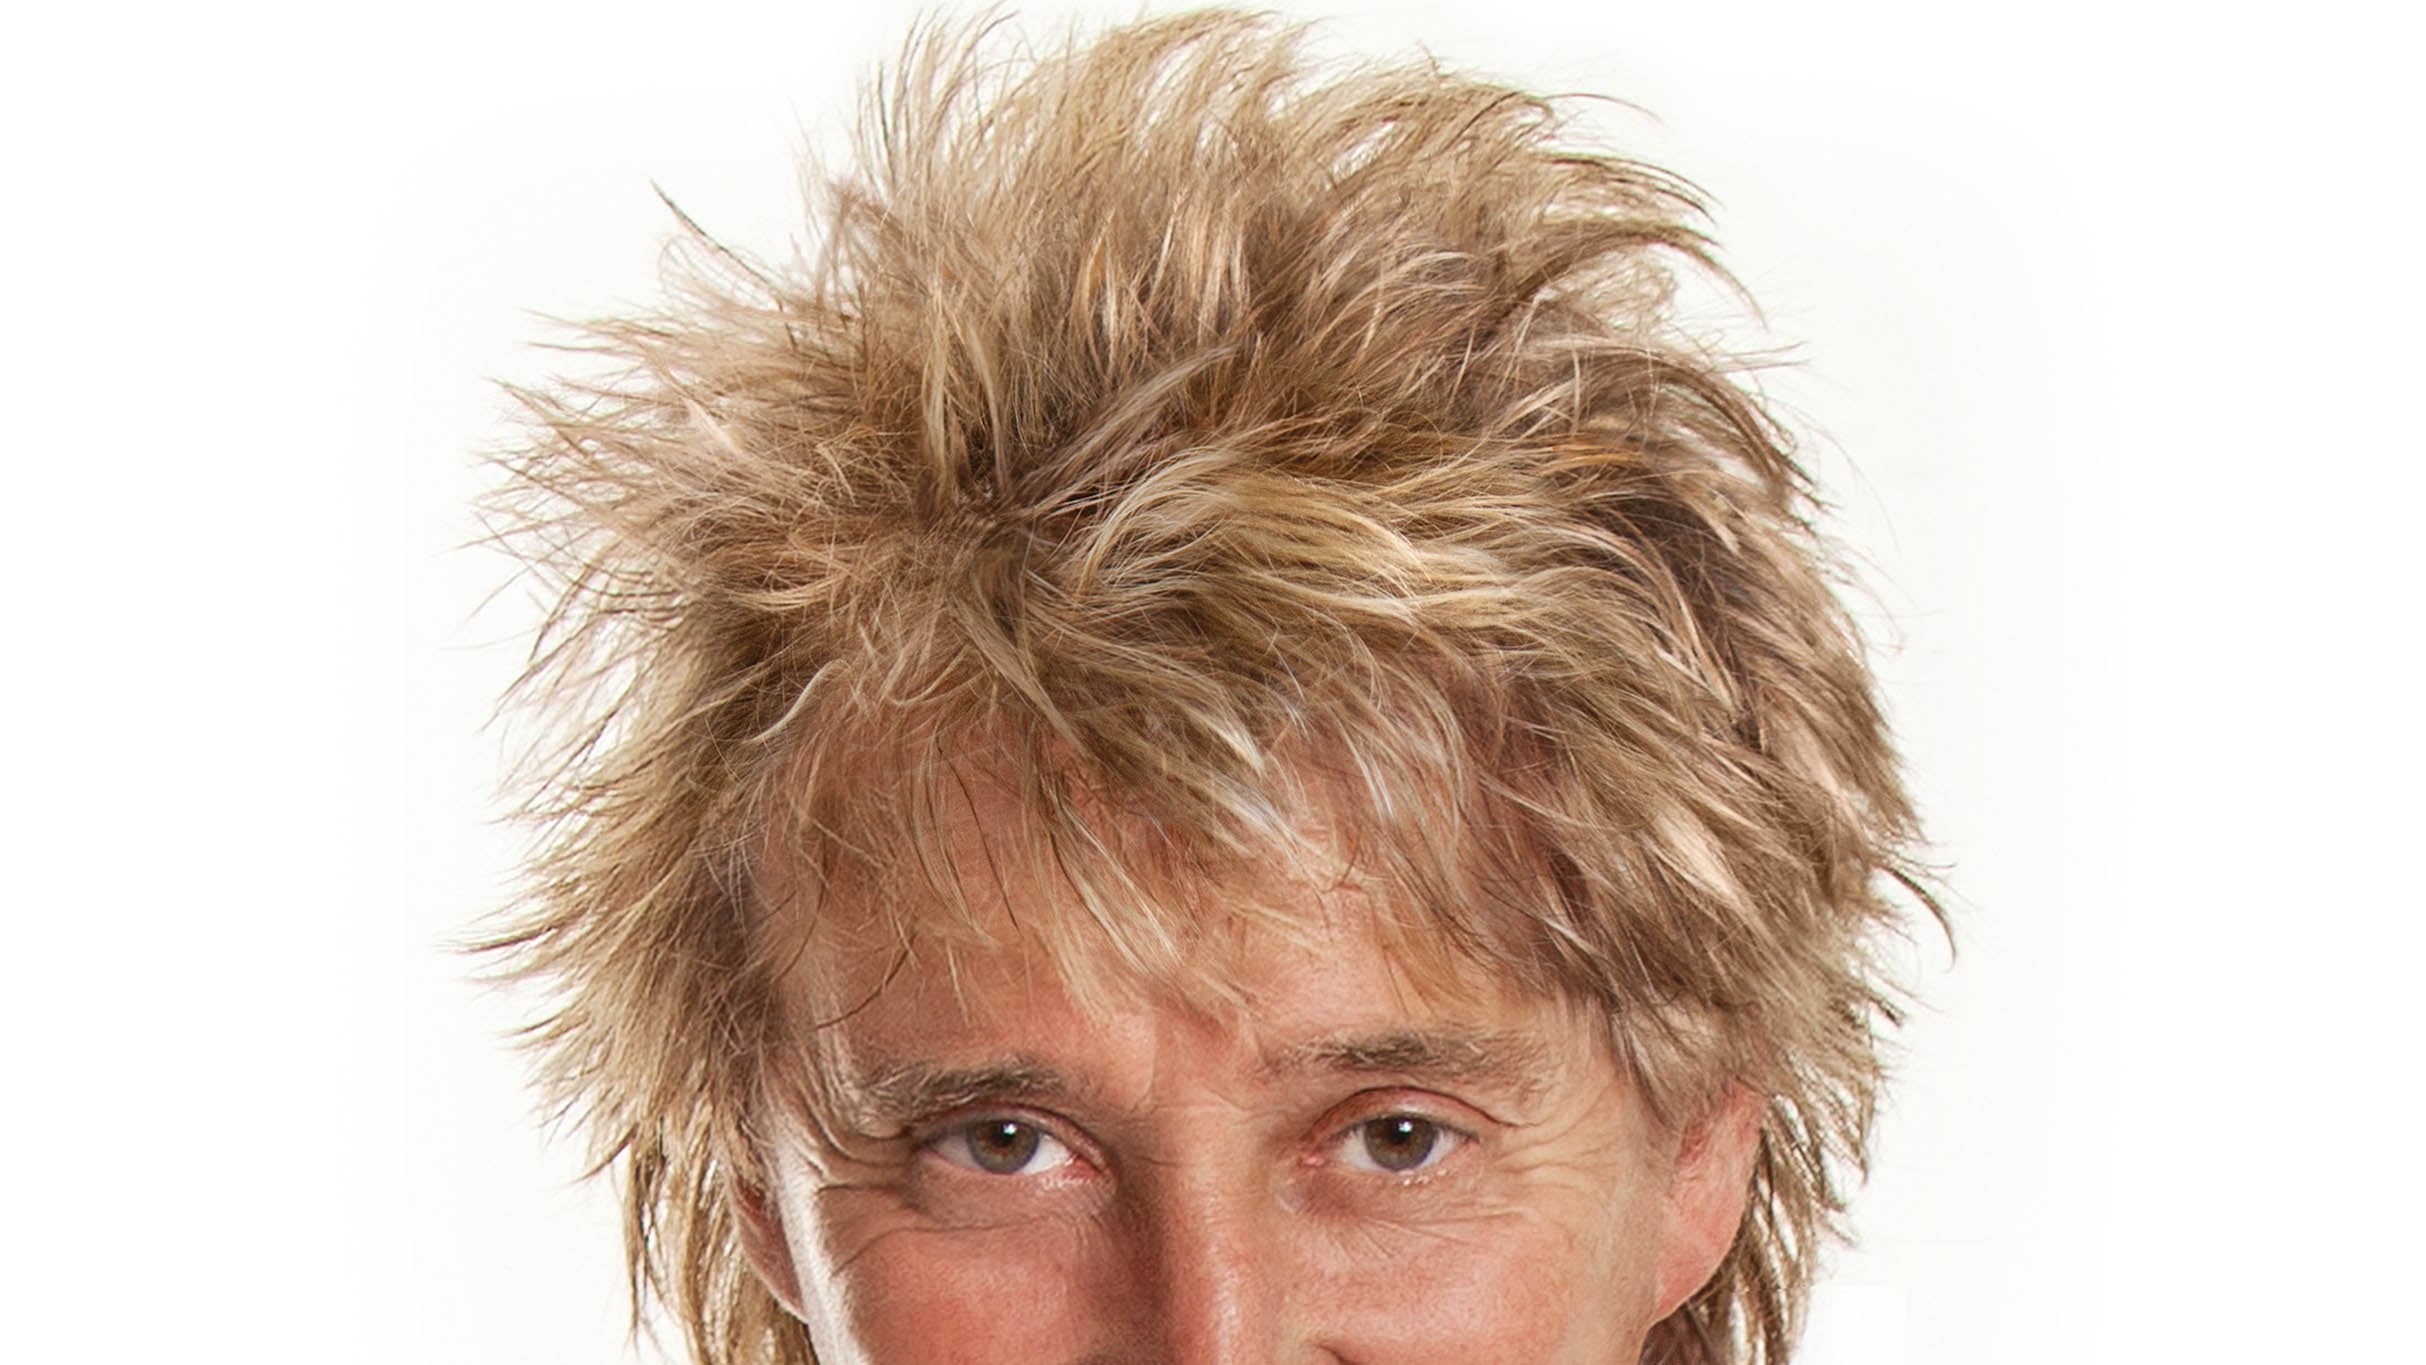 Rod Stewart: The Hits. in Las Vegas promo photo for Partner presale offer code